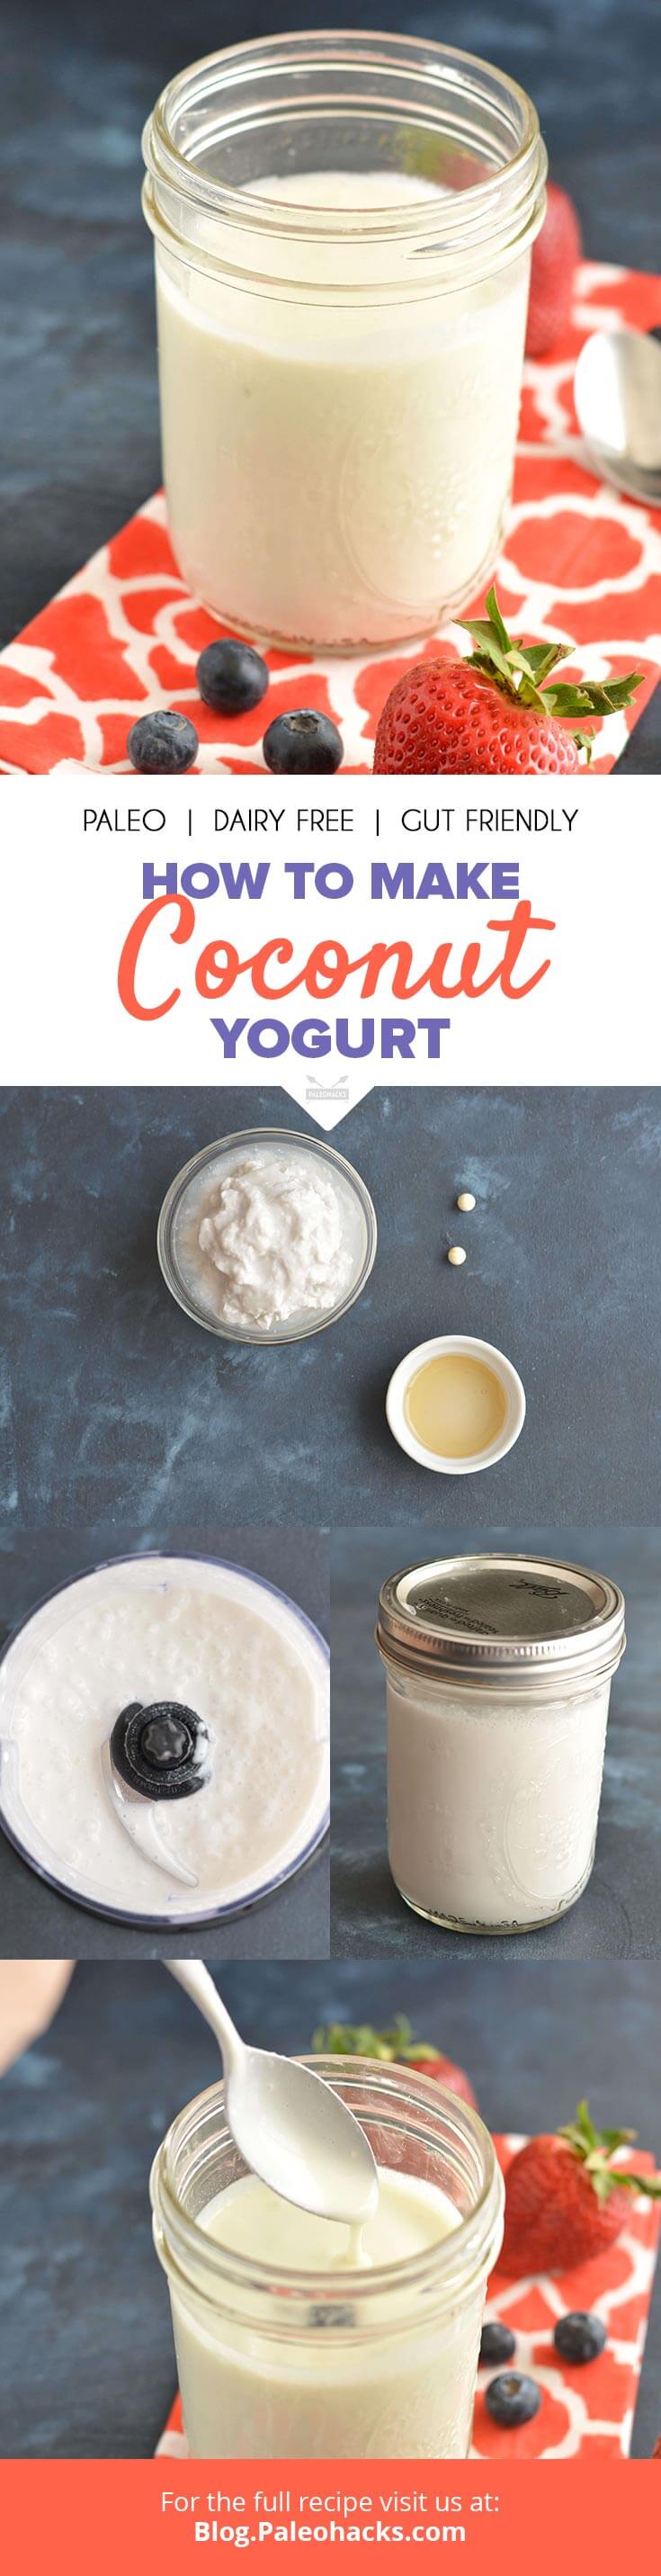 coconut yogurt pin